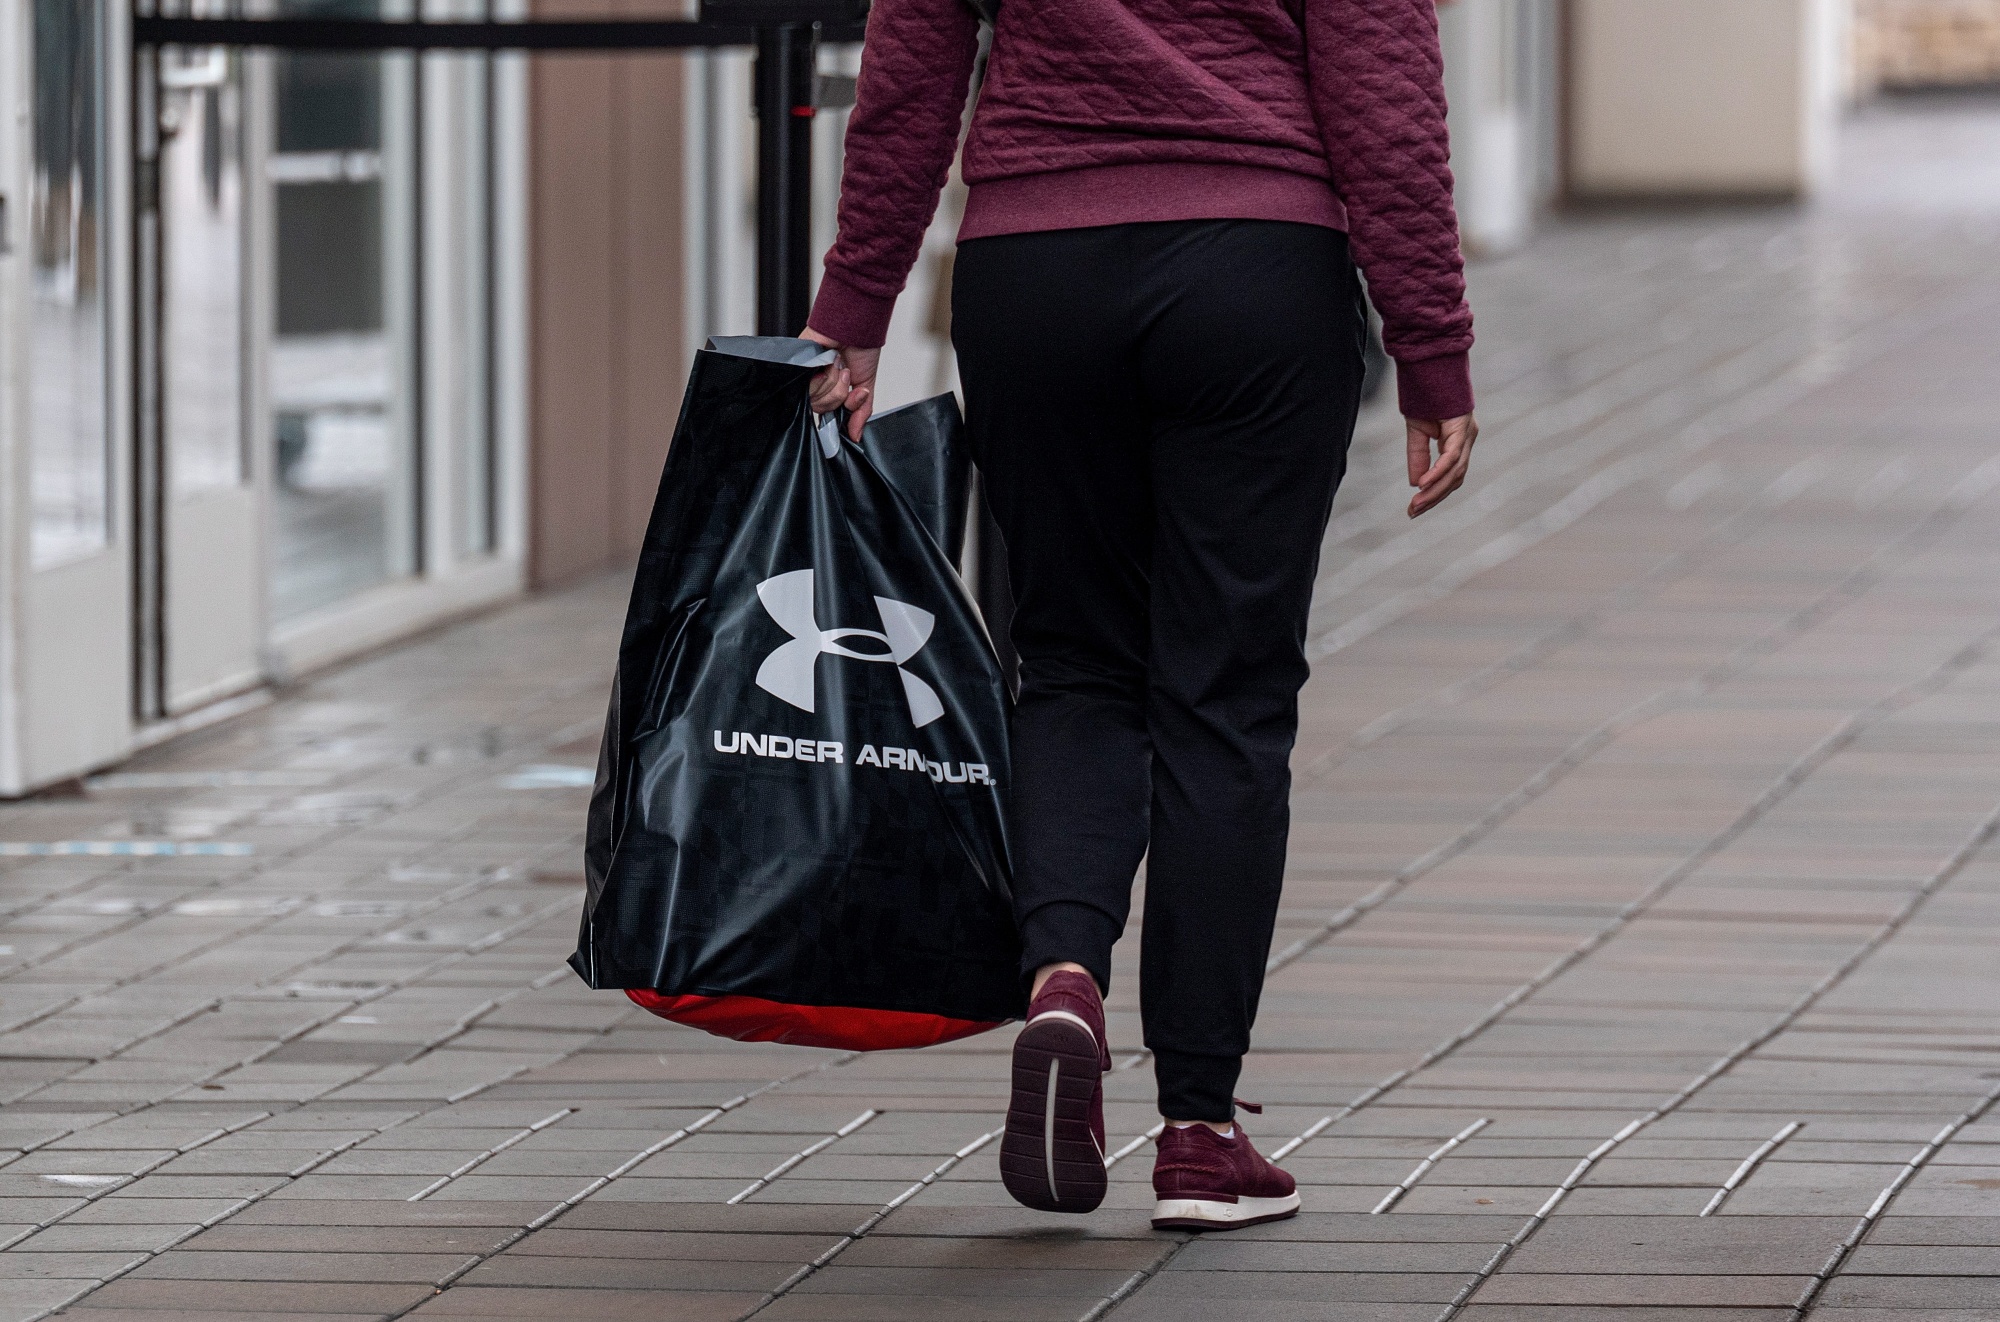 A shopper carries an Under Armour bag.